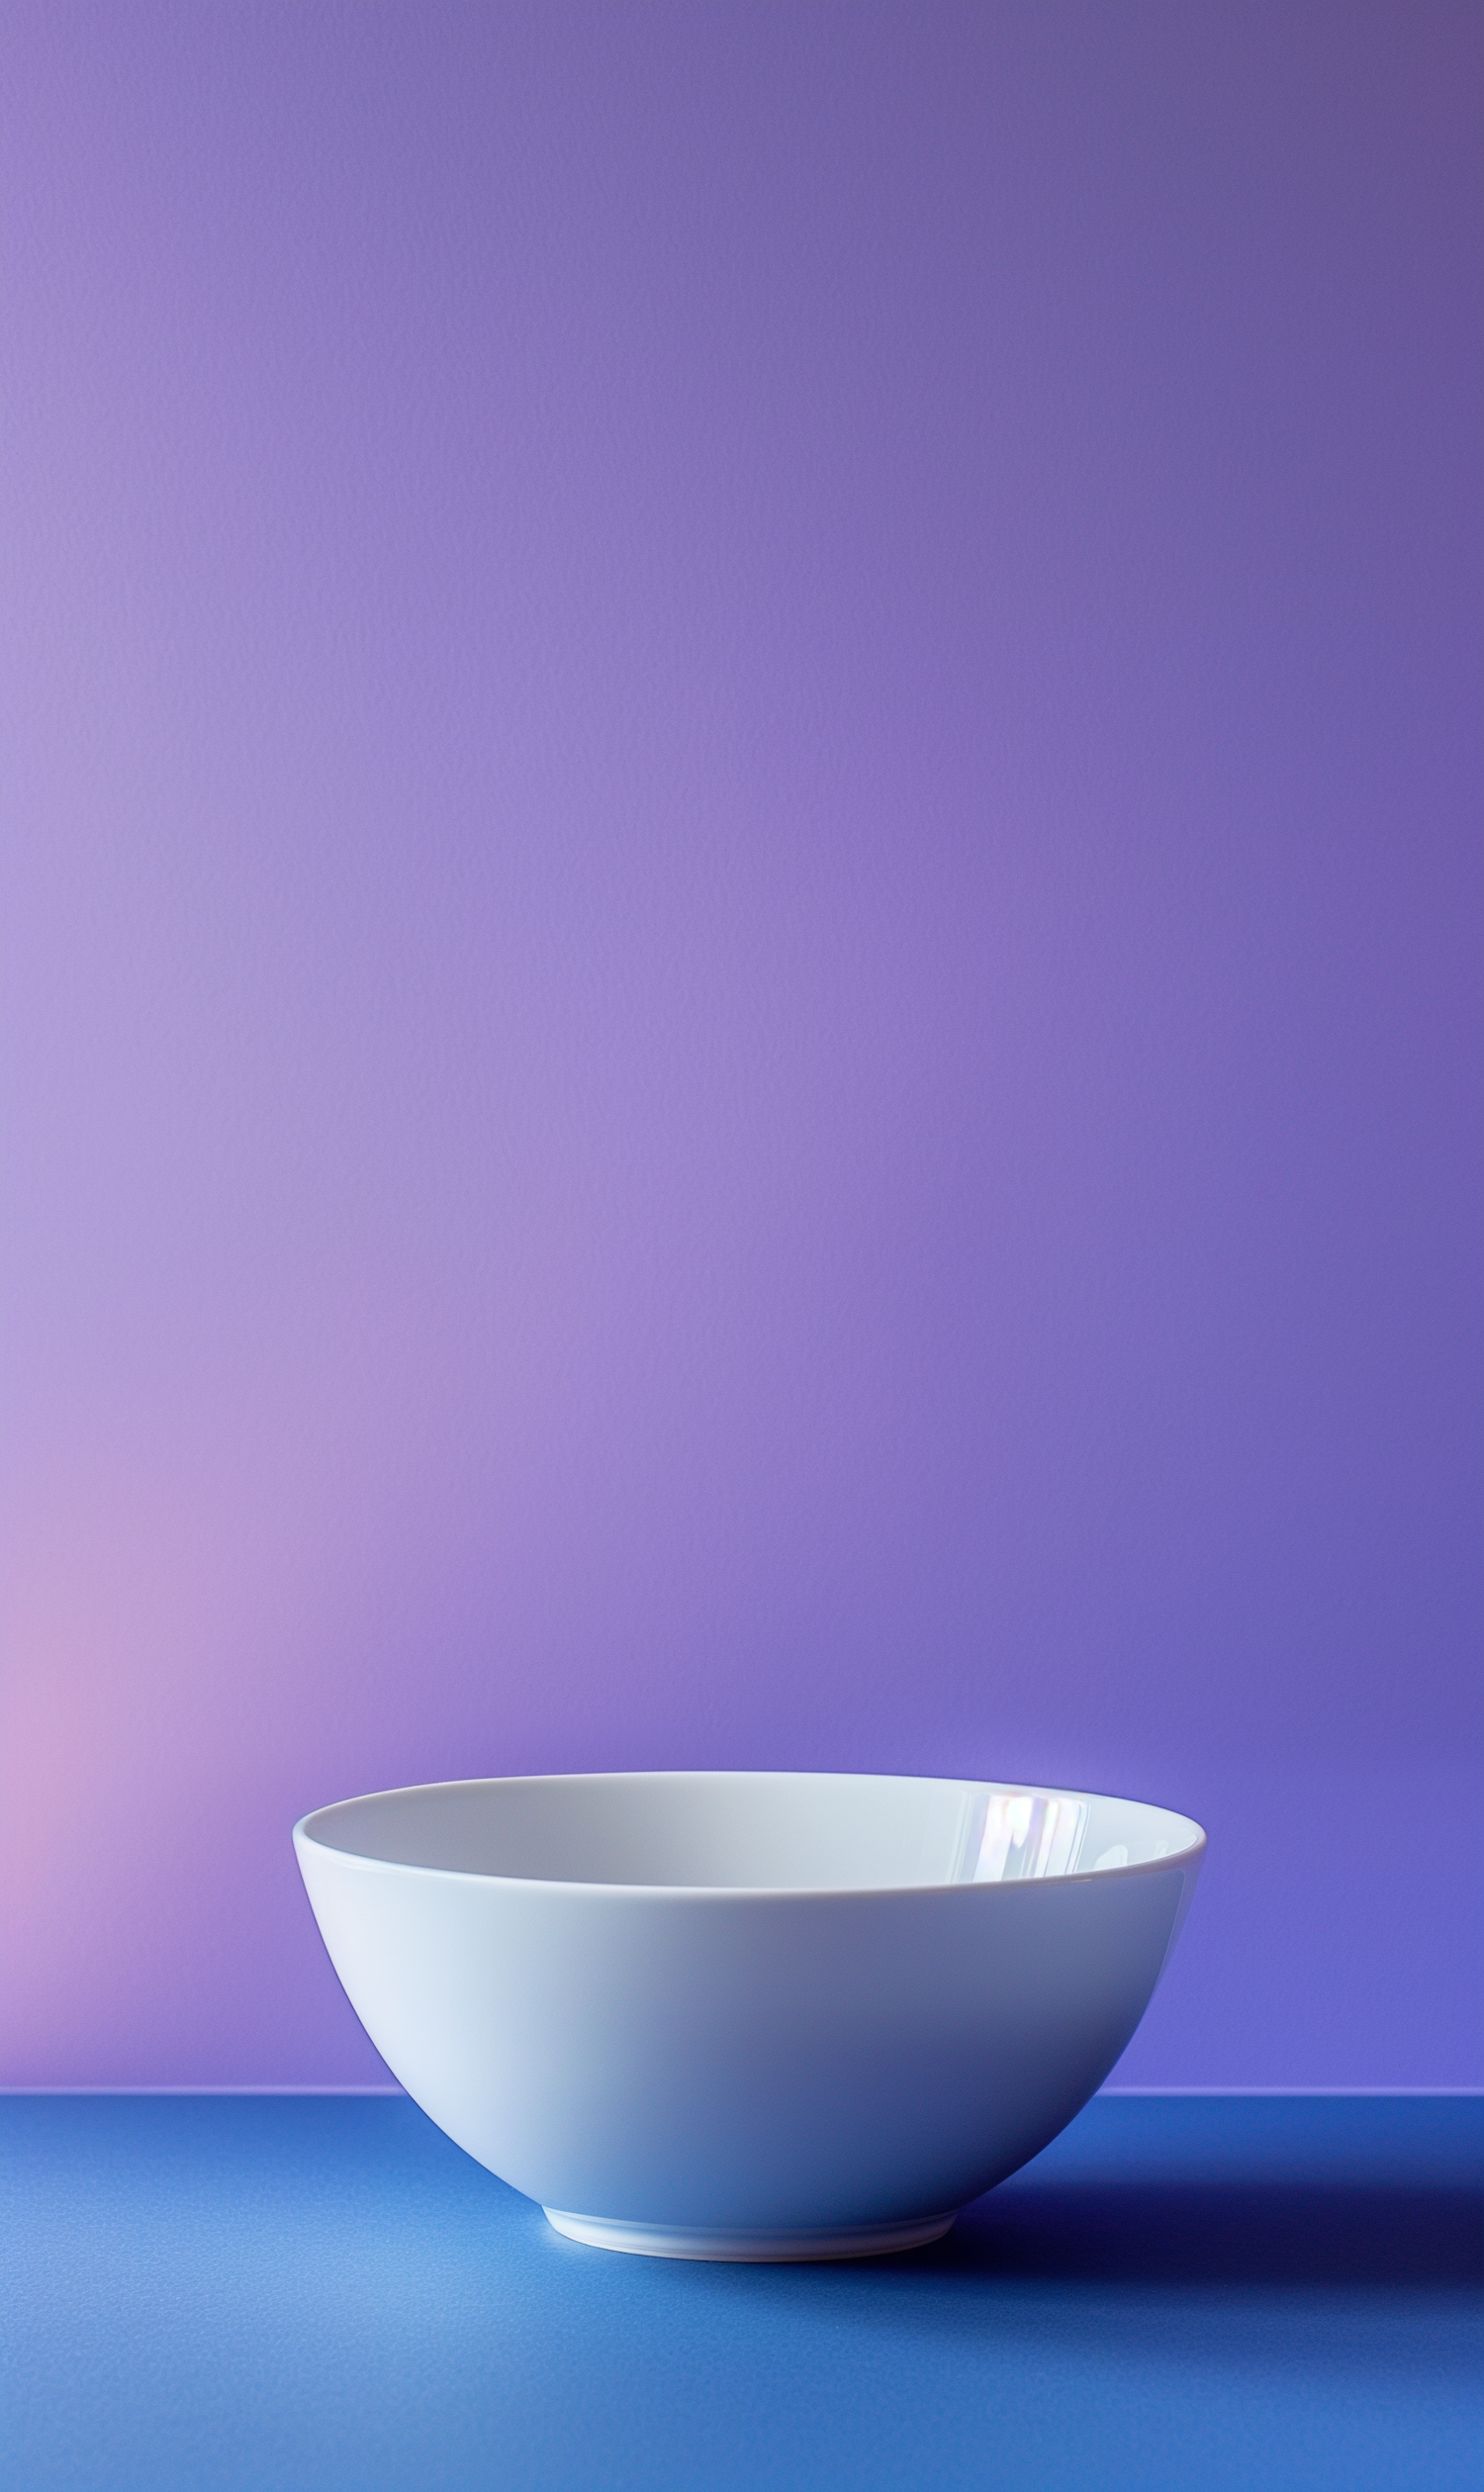 Minimalist Composition with Ceramic Bowl